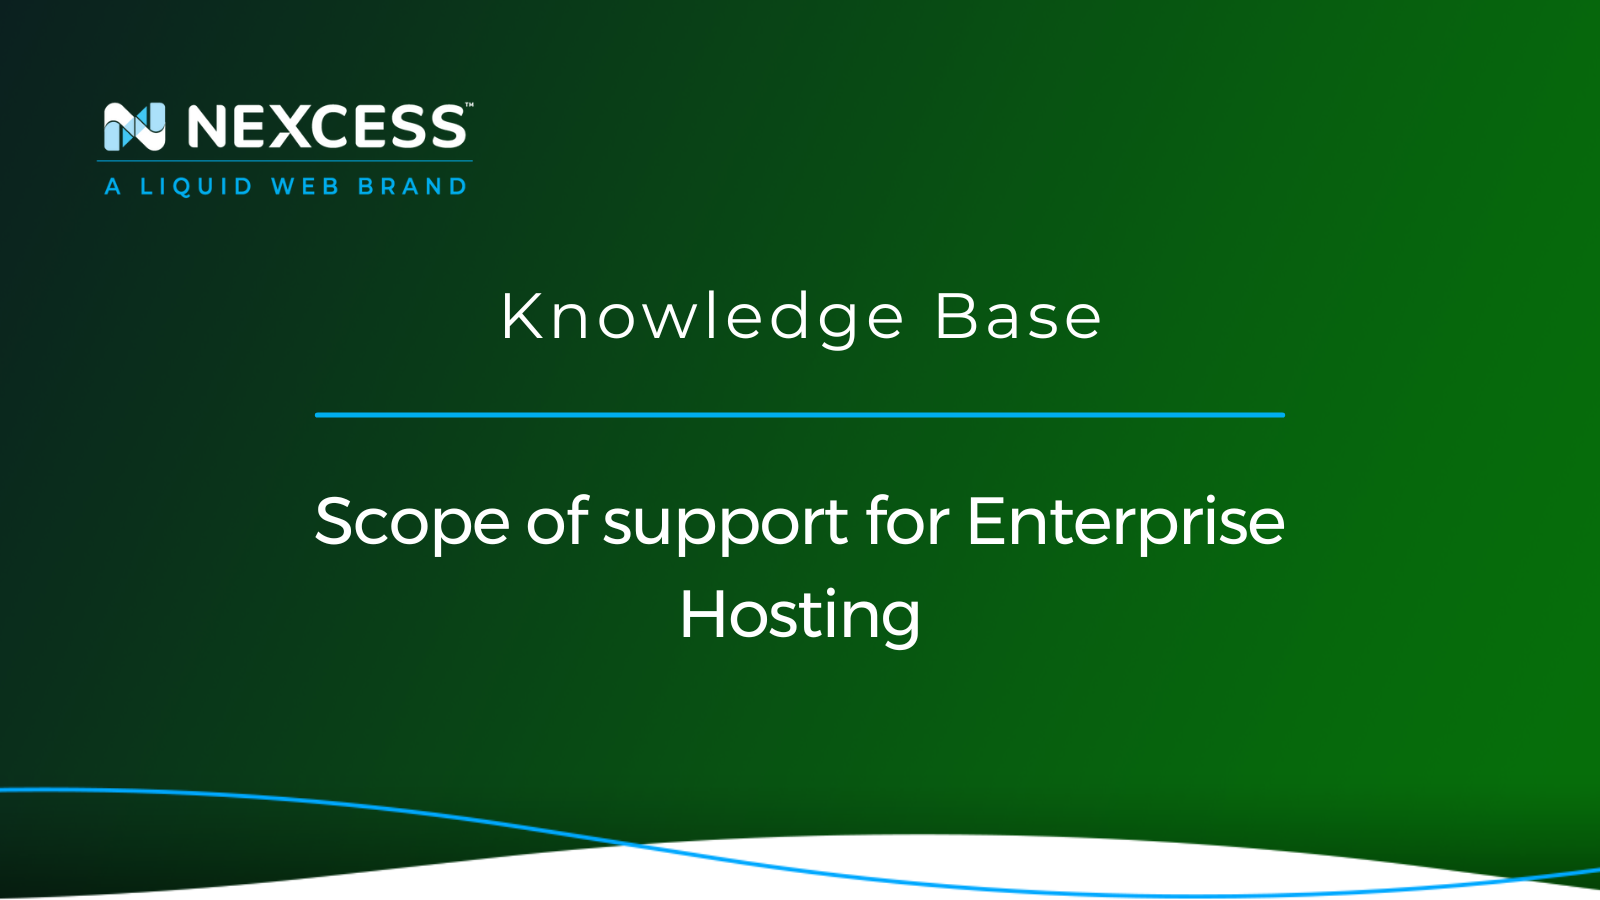 Scope of support for Enterprise Hosting